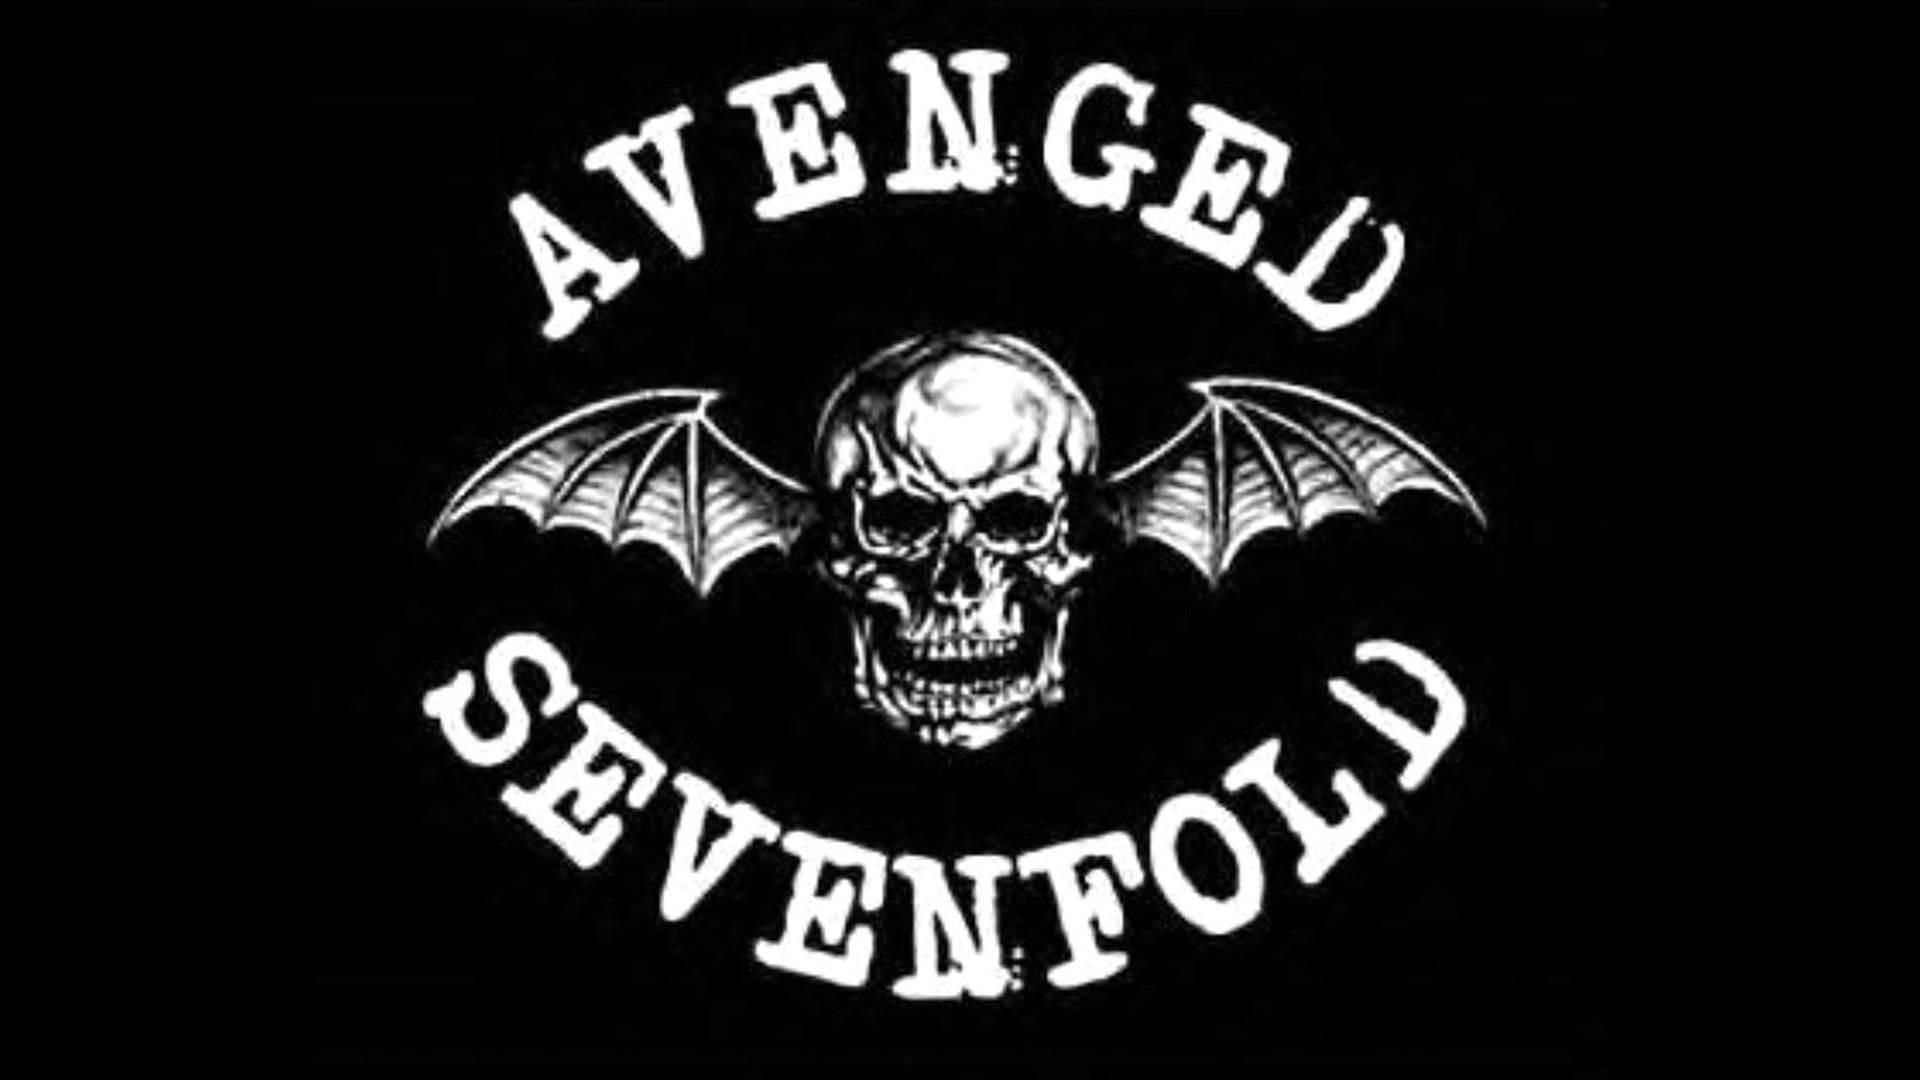 Download Wallpaper A Little Piece Of Heaven Avenged Sevenfold